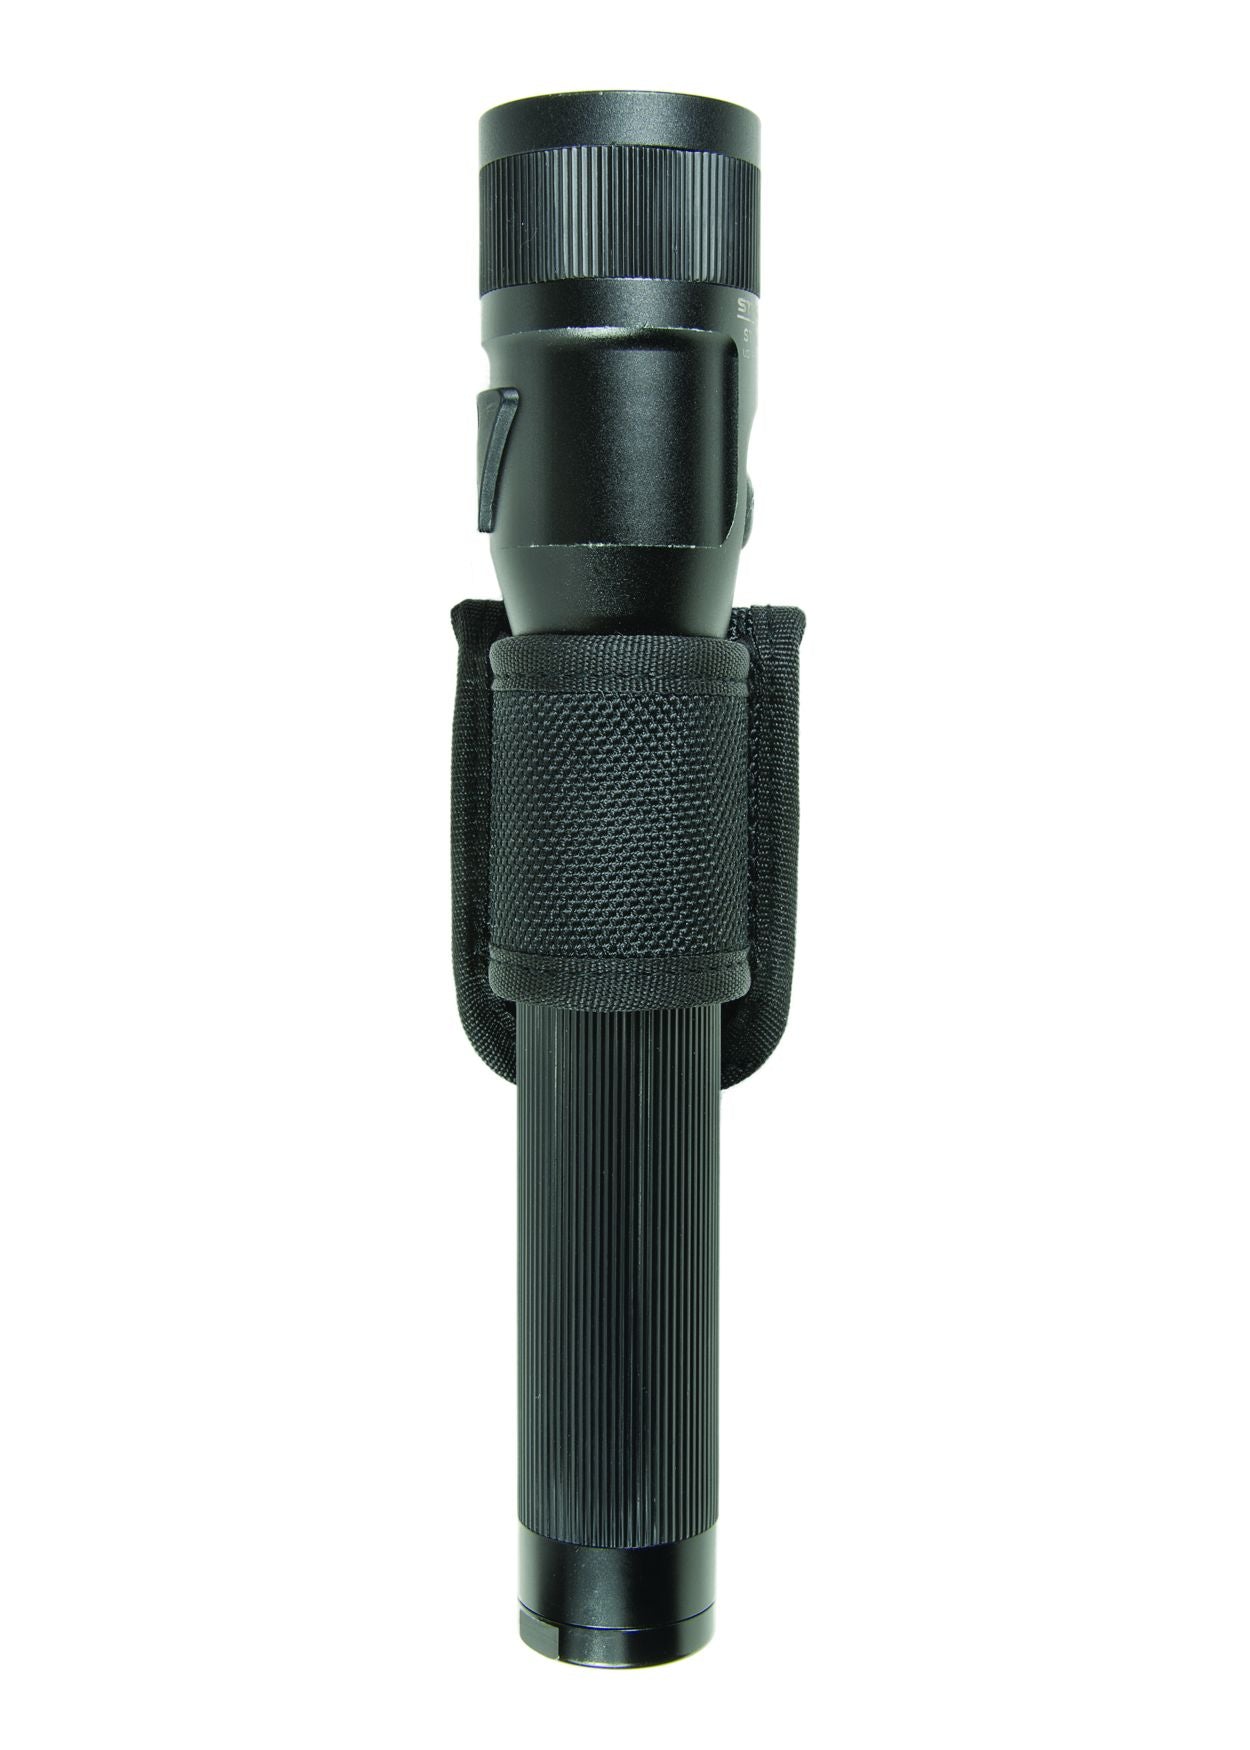 Ballistic Flashlight Holder - Open Top & Bottom - Large